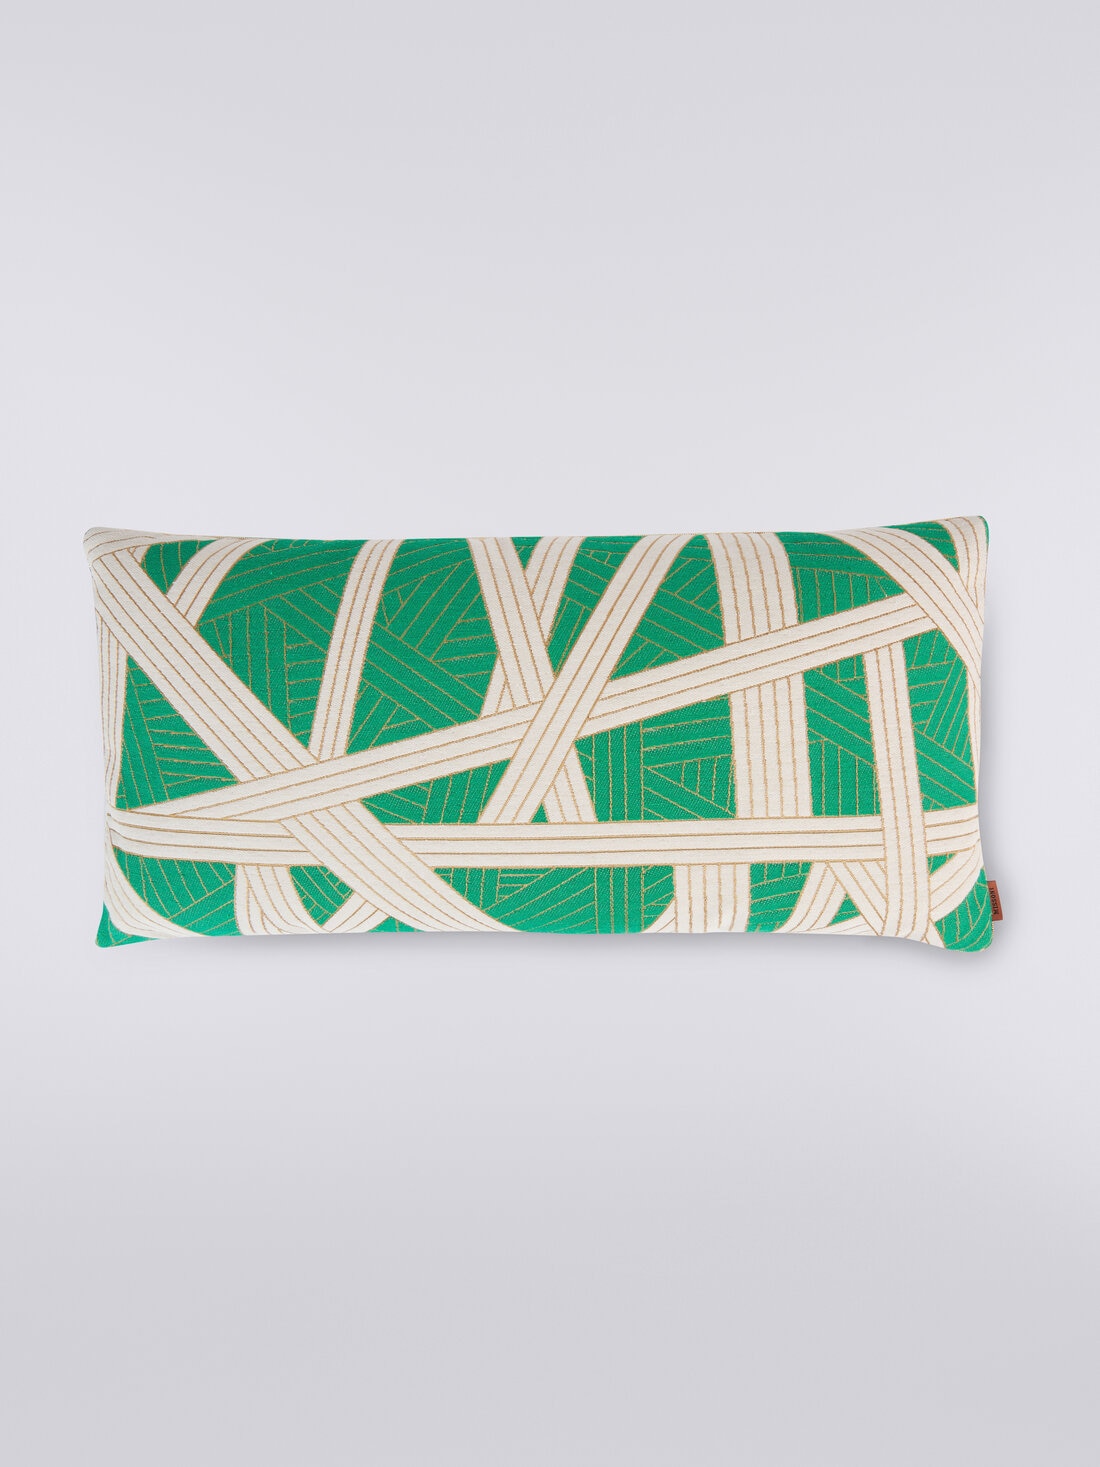 Nastri 30x60 cm cushion with stitching, Multicoloured  - 8051575830808 - 0